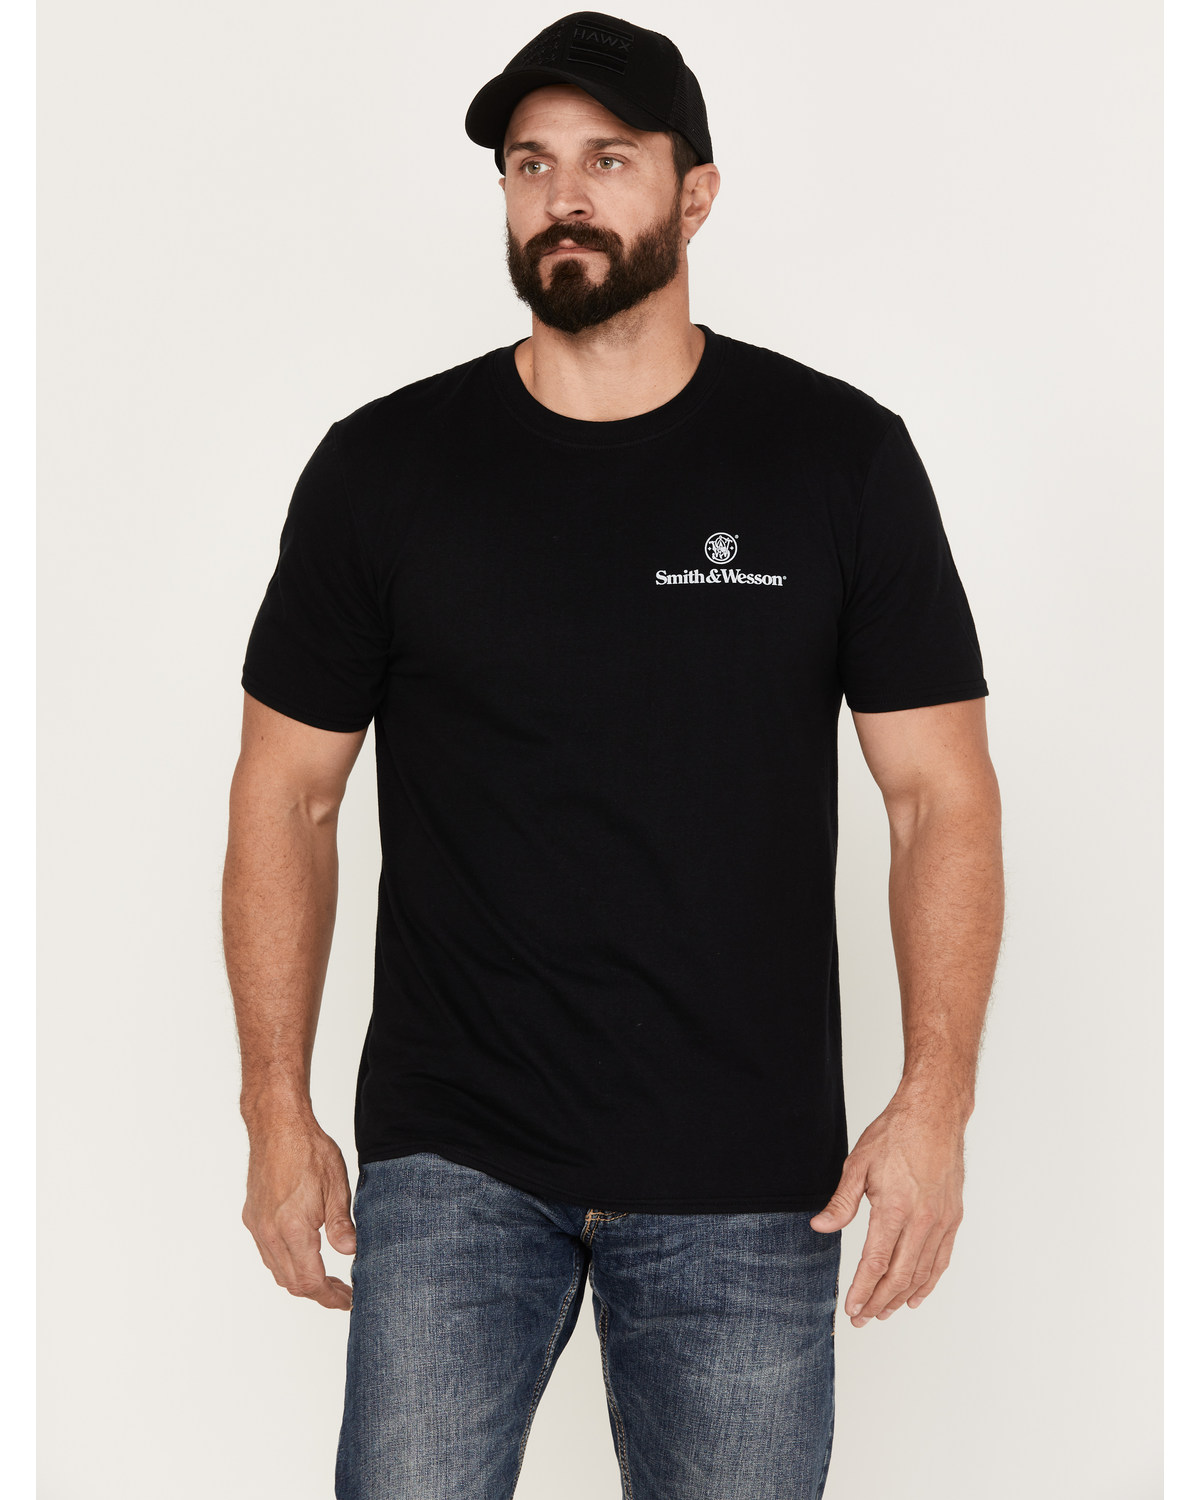 Smith & Wesson Men's Original Trademark Short Sleeve Graphic T-Shirt